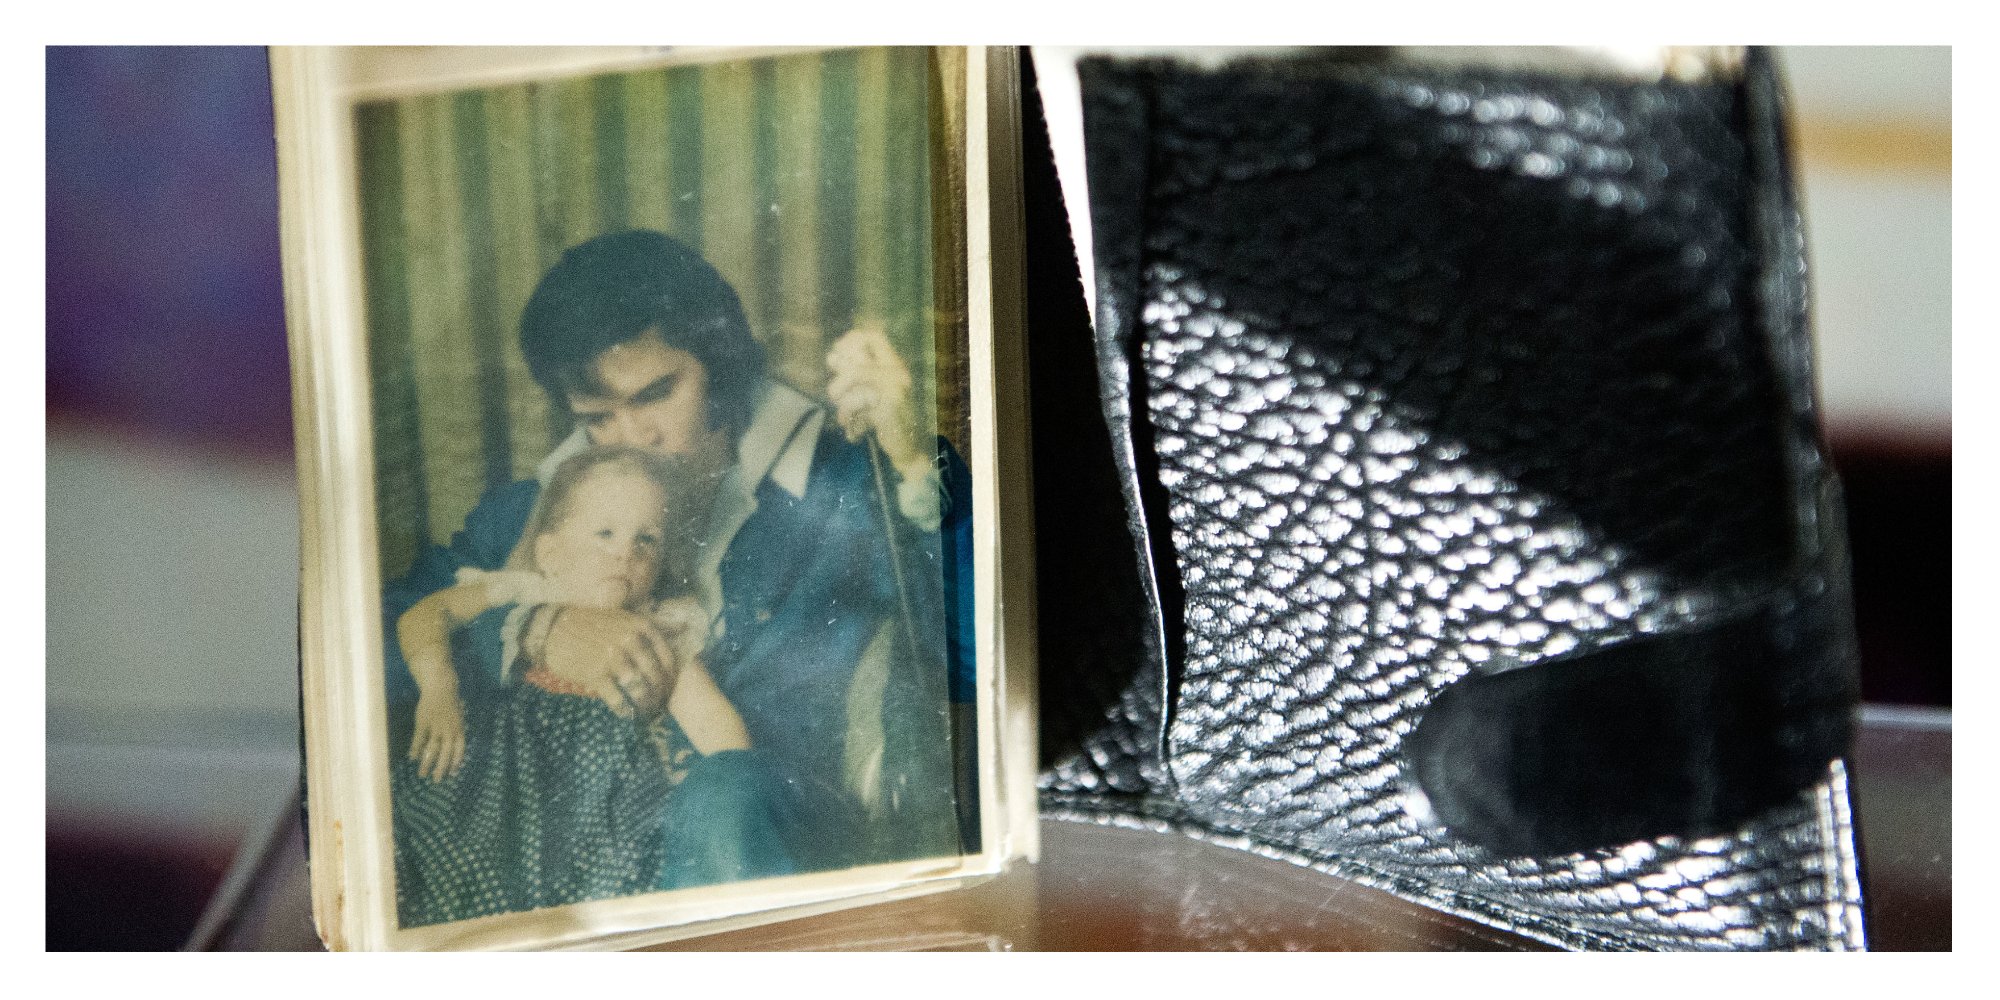 Elvis Presley and Lisa Marie Presley in a photograph seen in Elvis' wallet at Graceland.